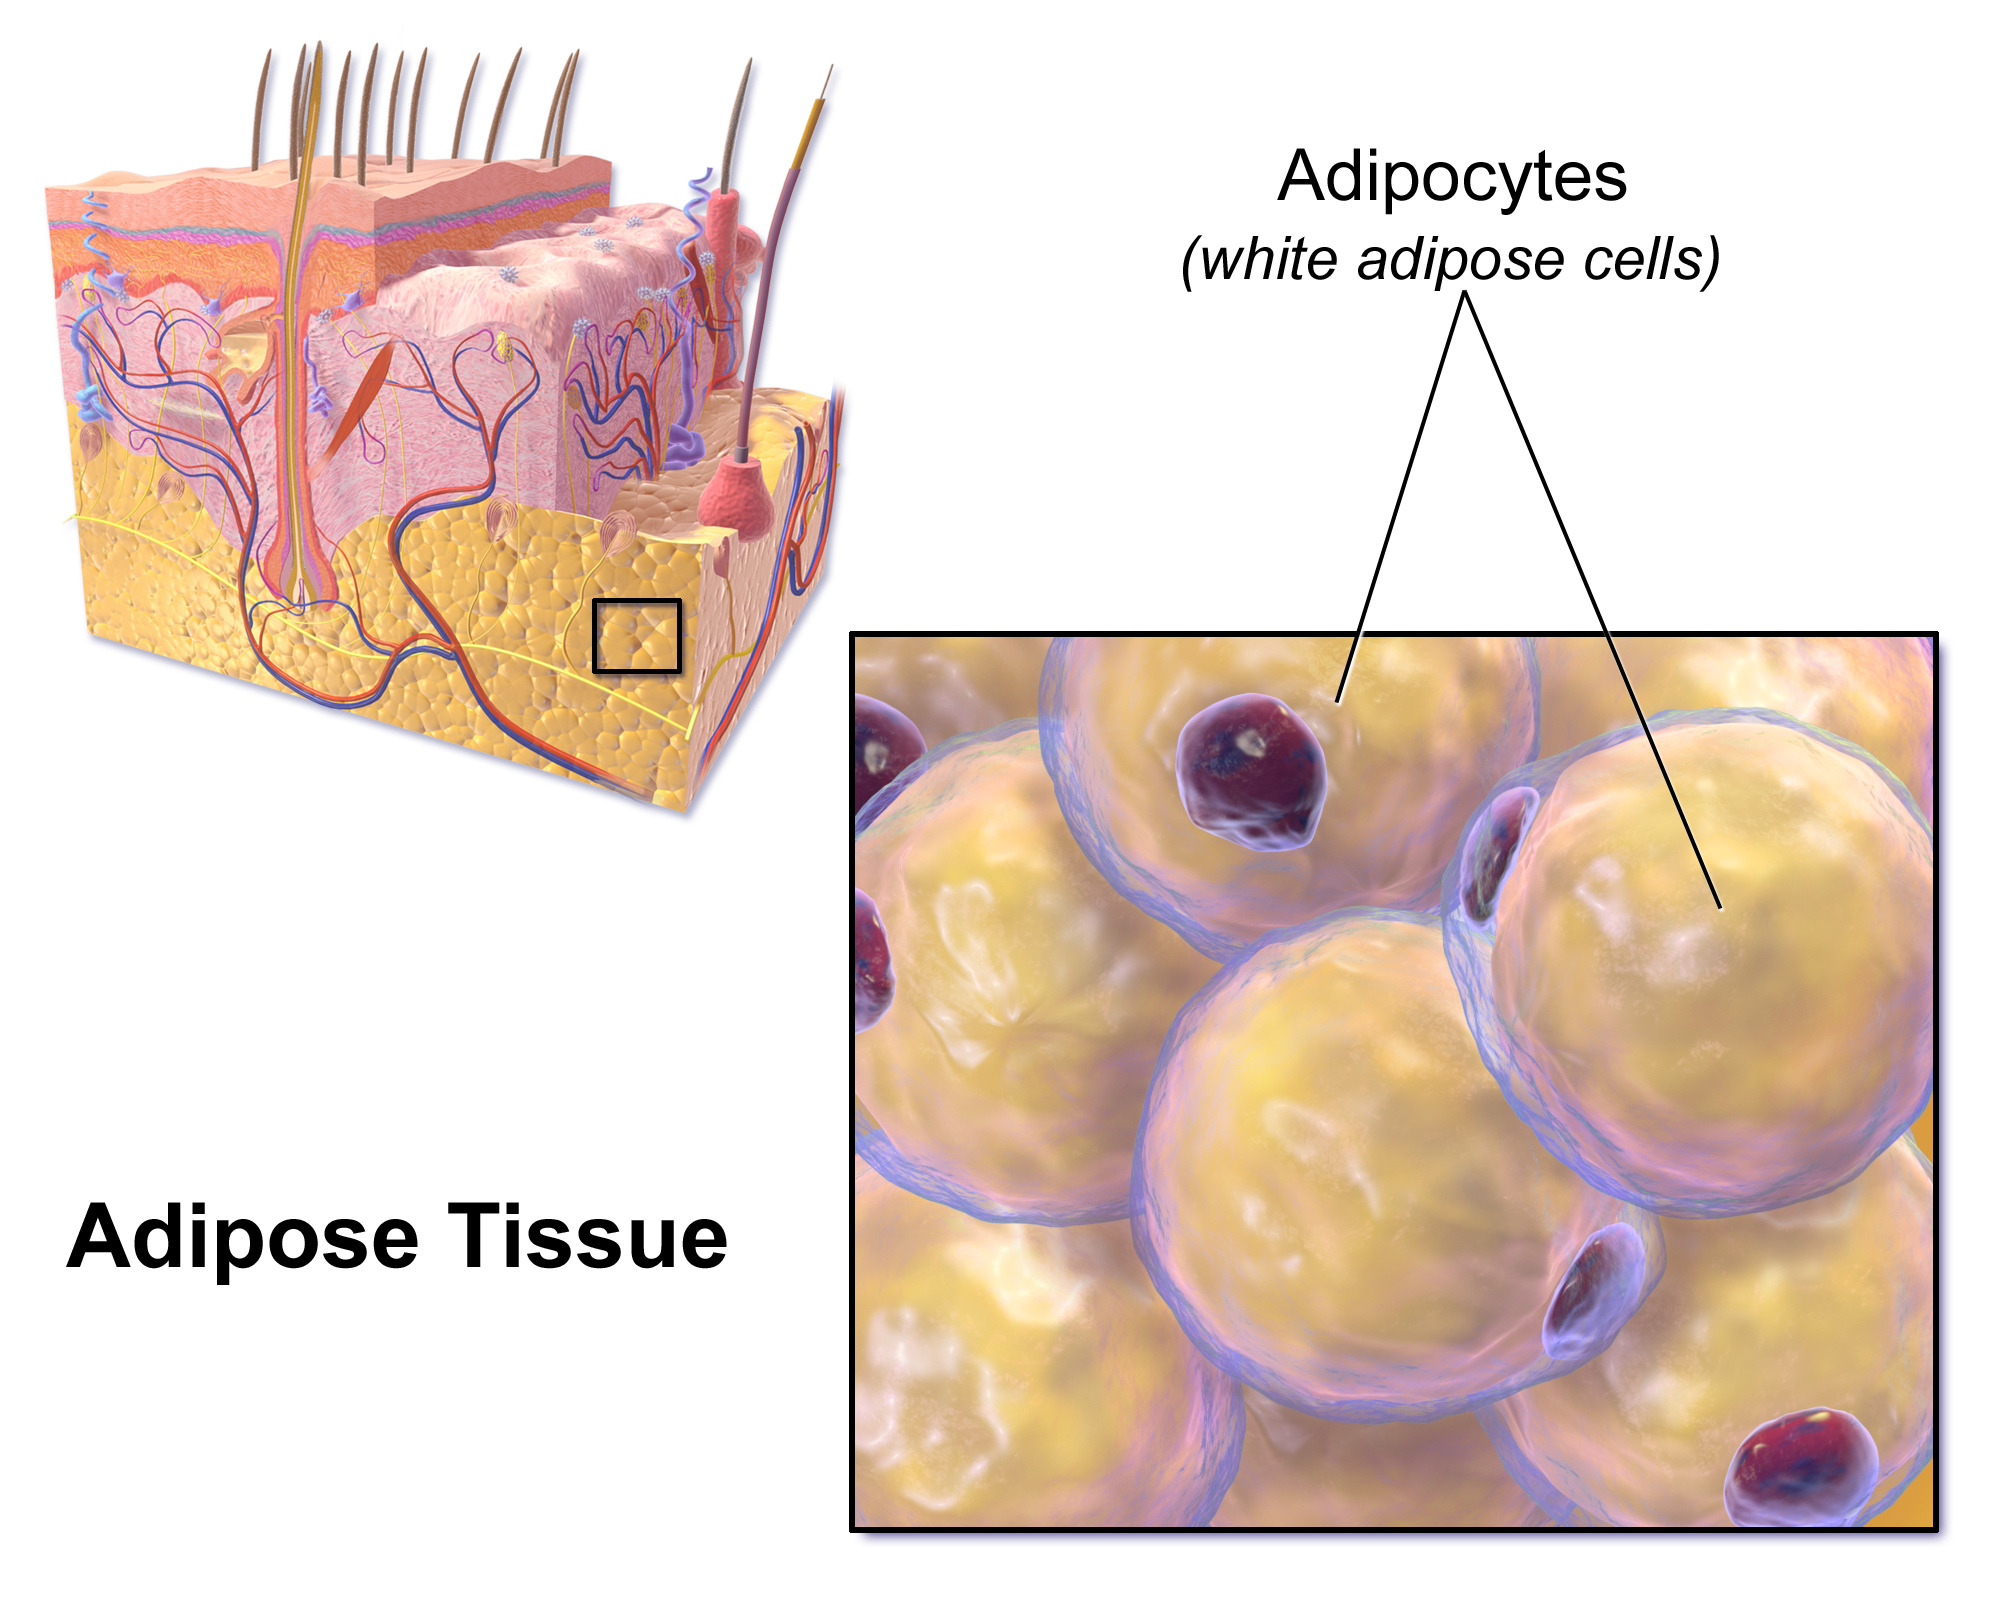 Picture of adipose tissue